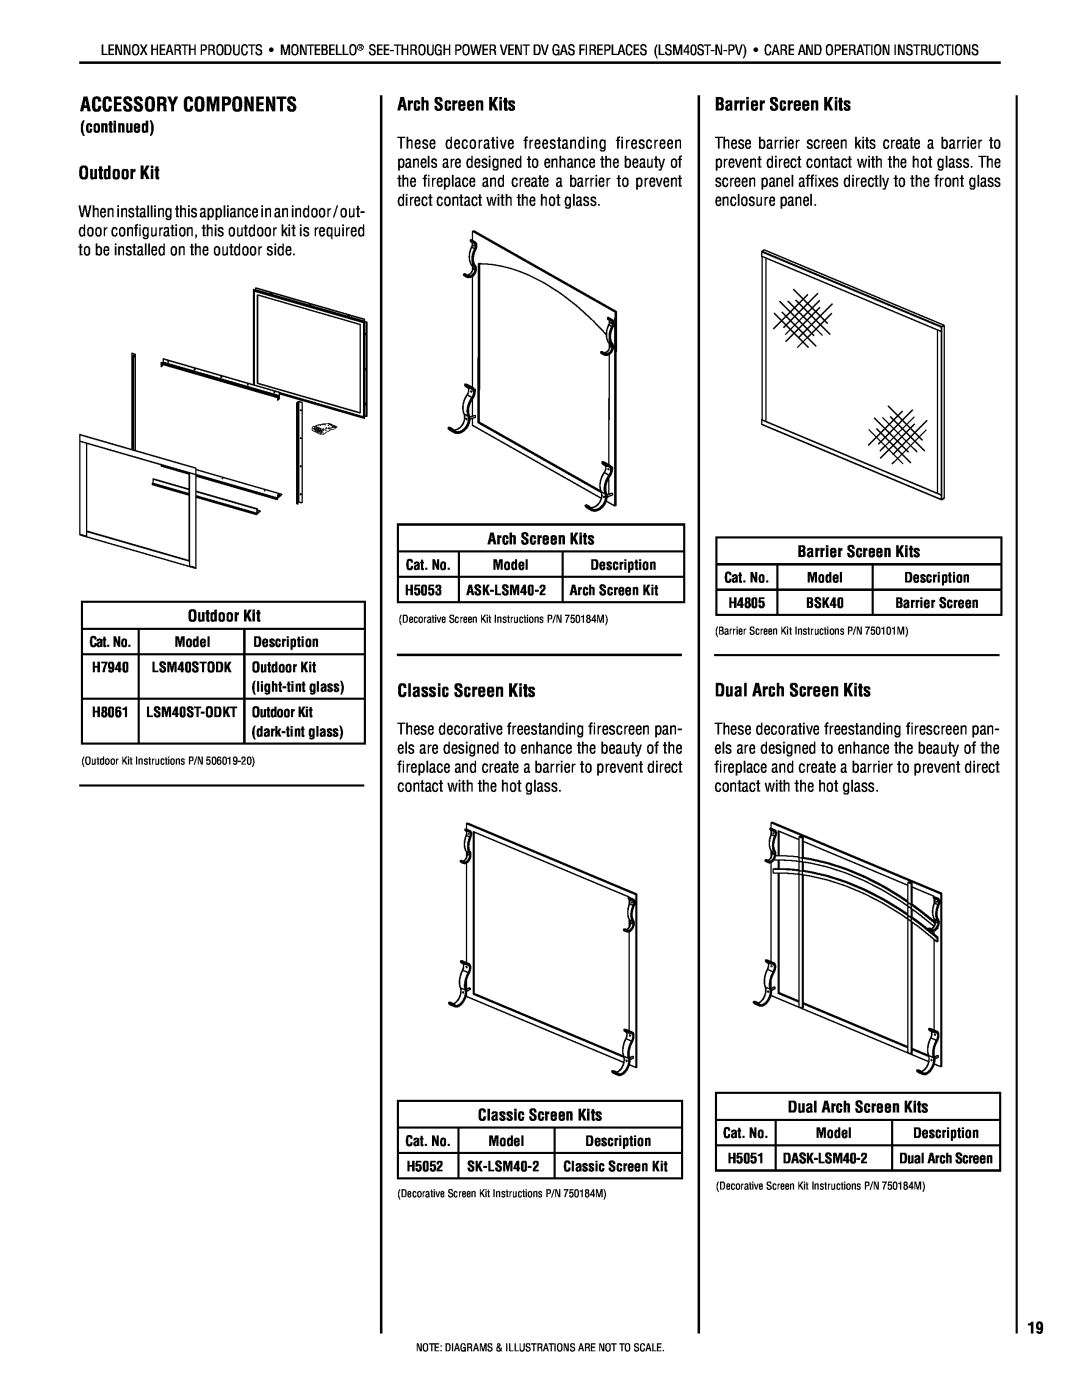 Lennox Hearth LSM40ST-N-PV Outdoor Kit, Classic Screen Kits, Barrier Screen Kits, Dual Arch Screen Kits 